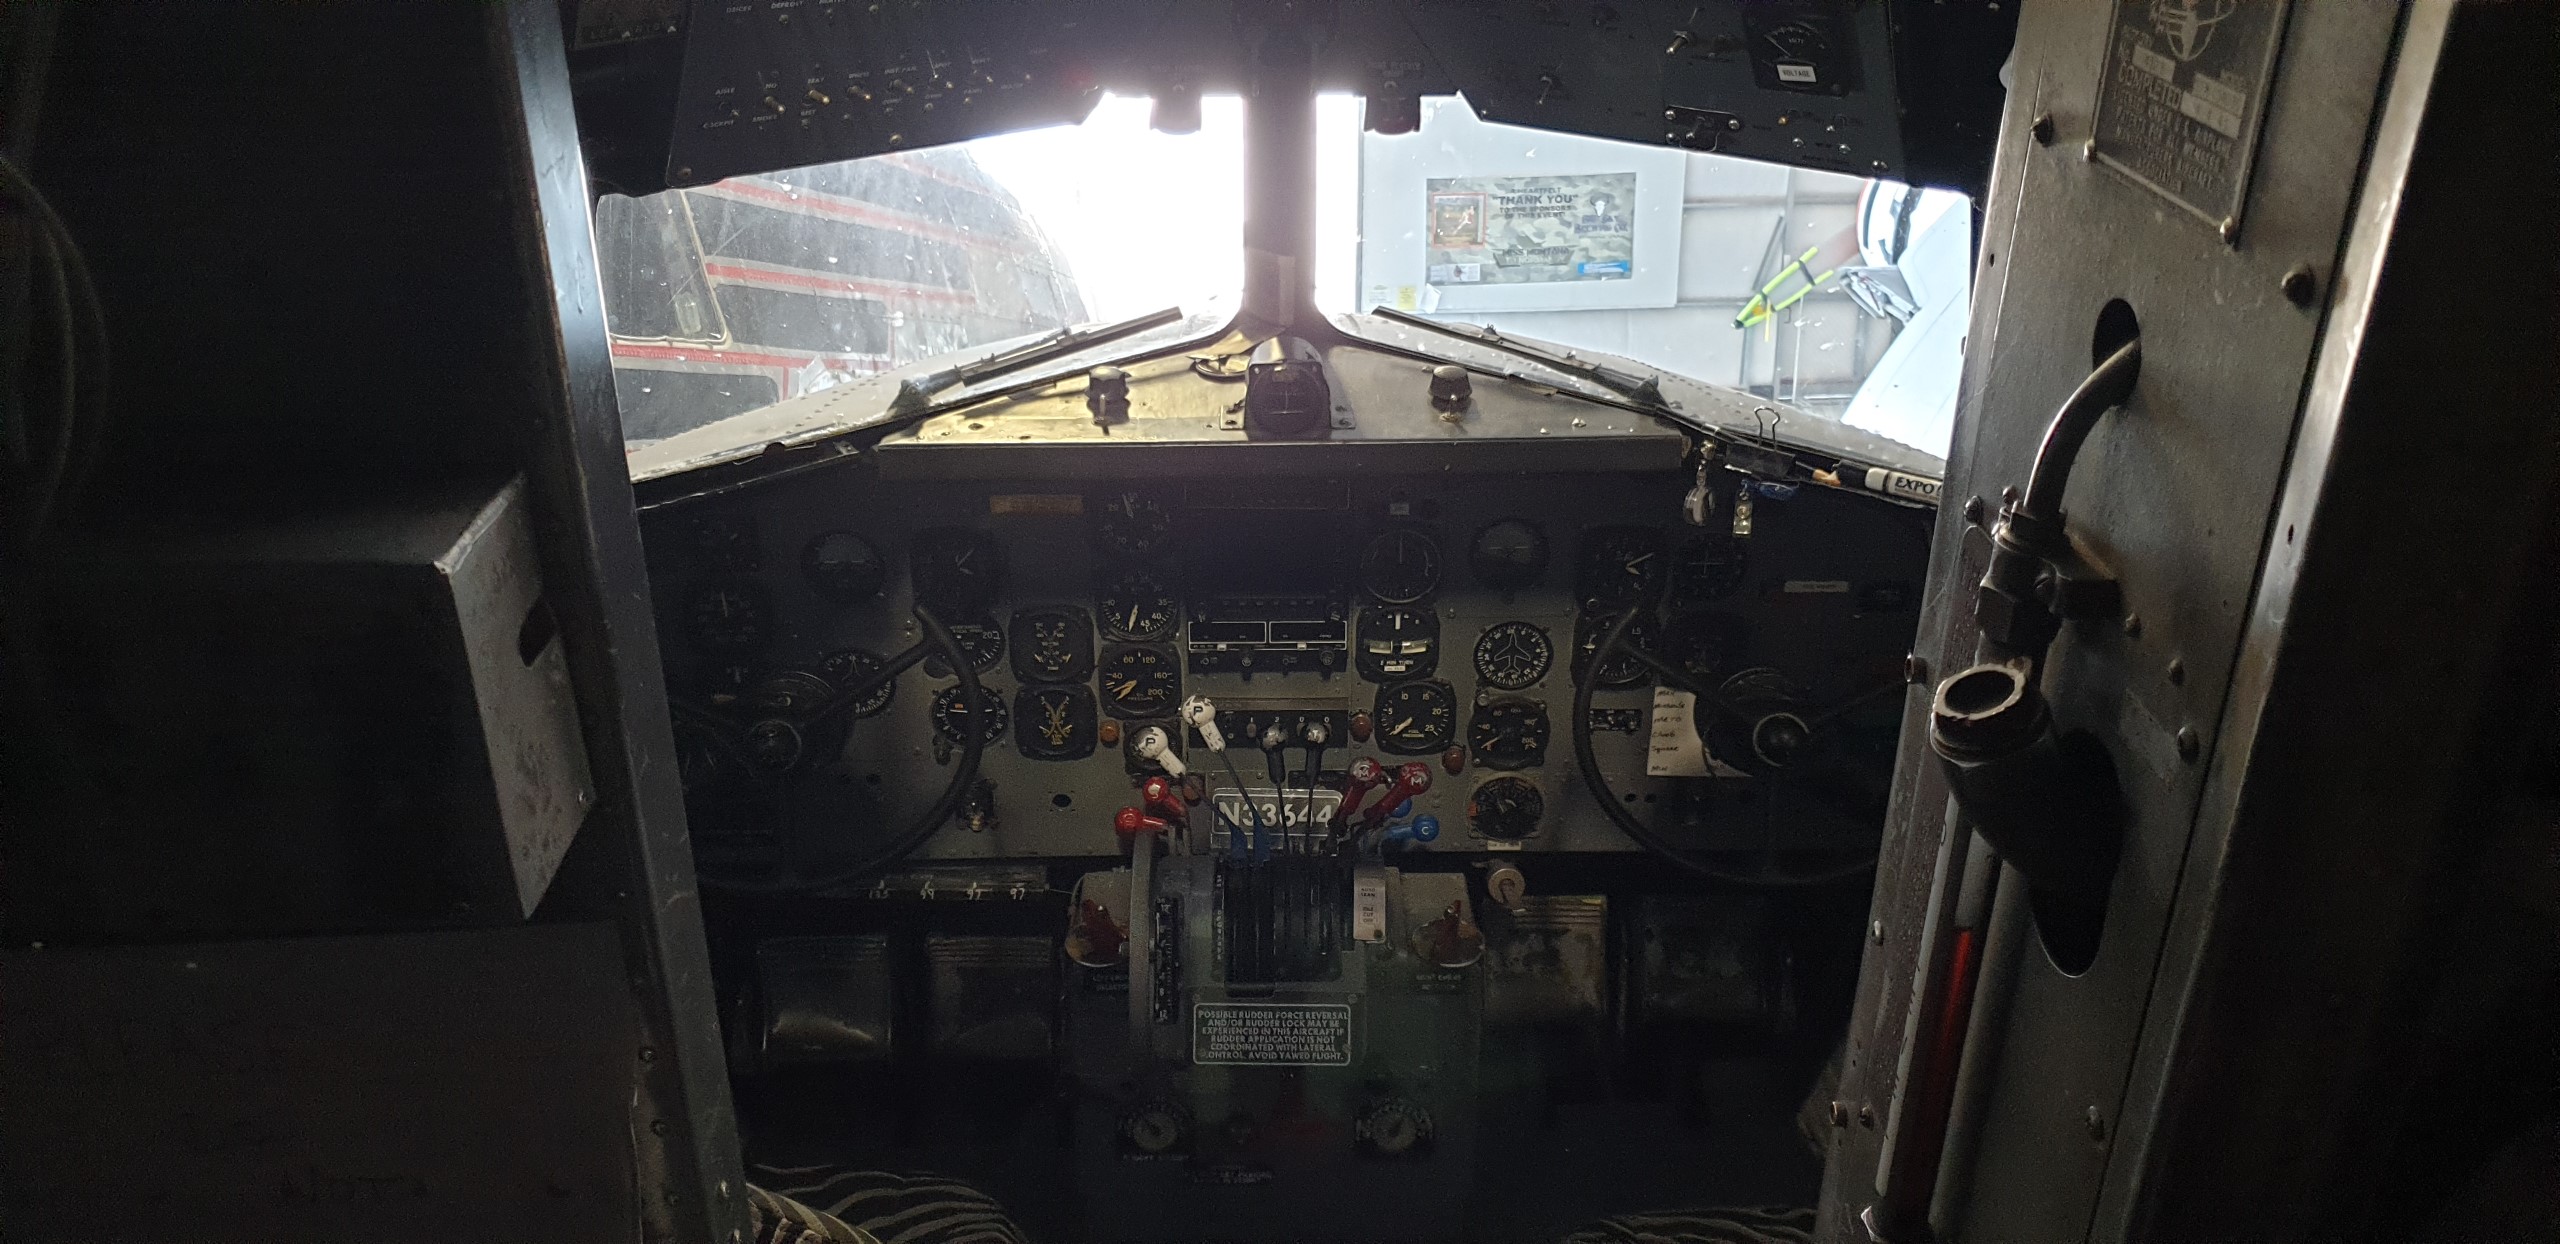 Inside the cockpit